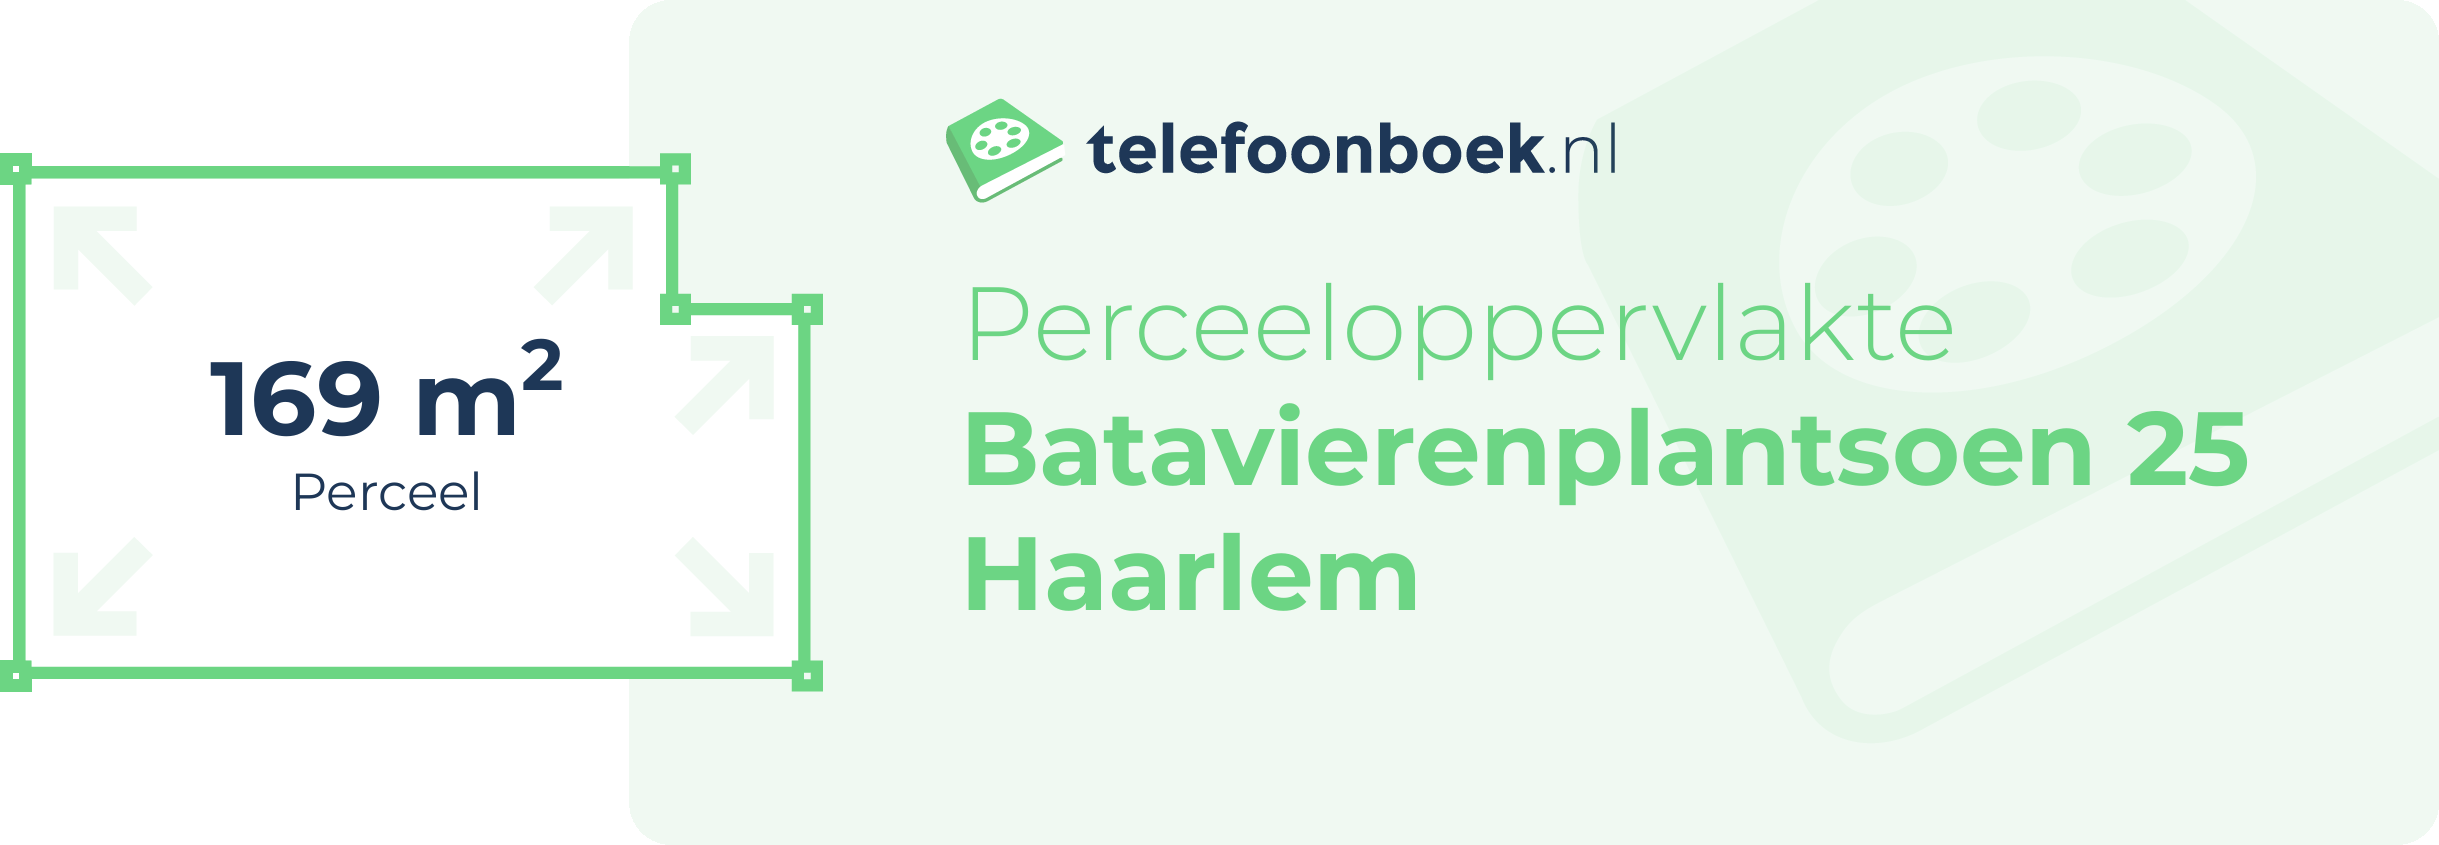 Perceeloppervlakte Batavierenplantsoen 25 Haarlem